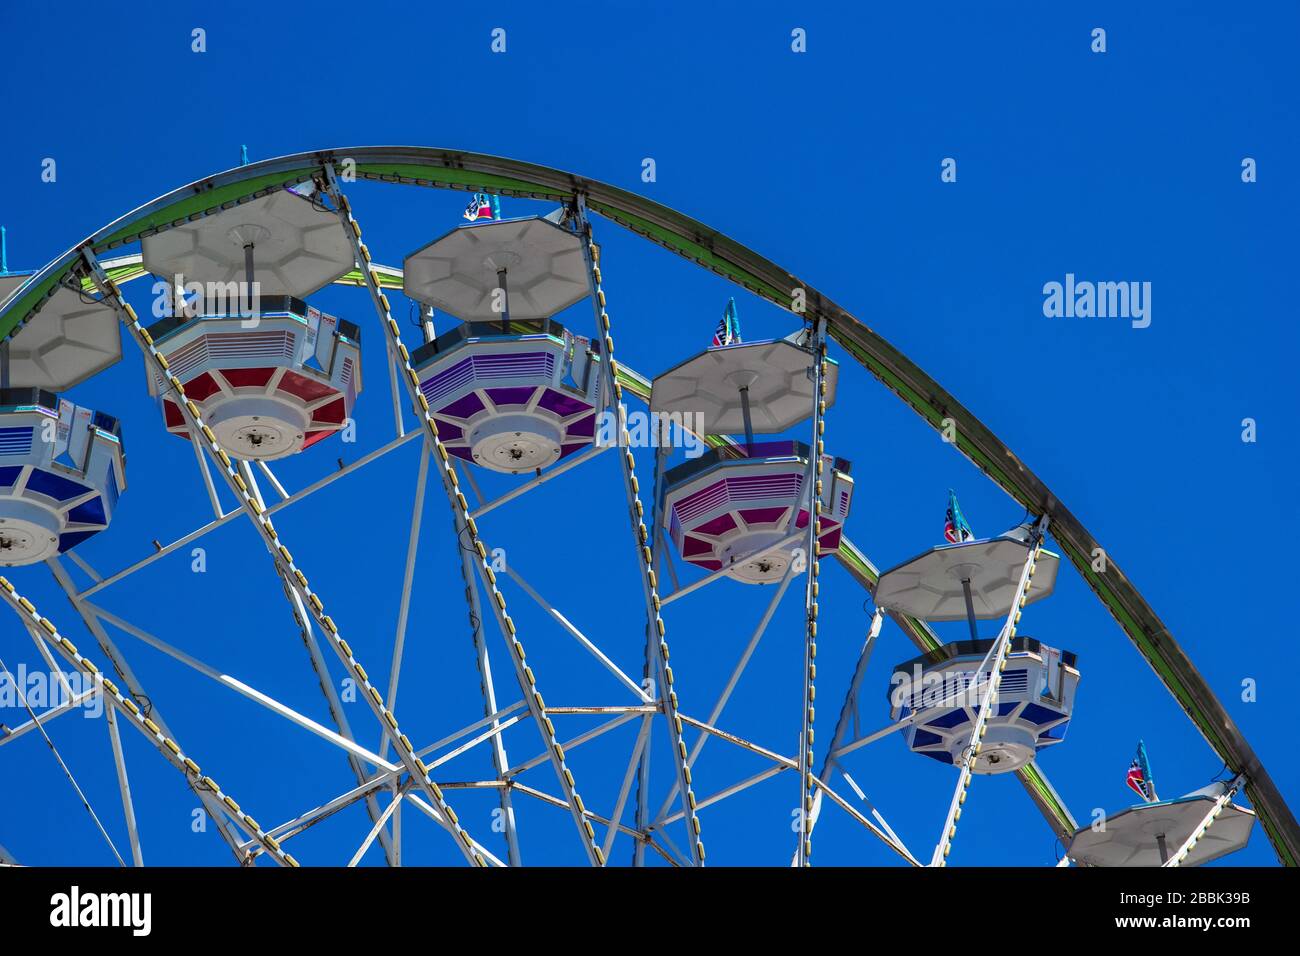 A ferris wheel ride against a blue sky Stock Photo